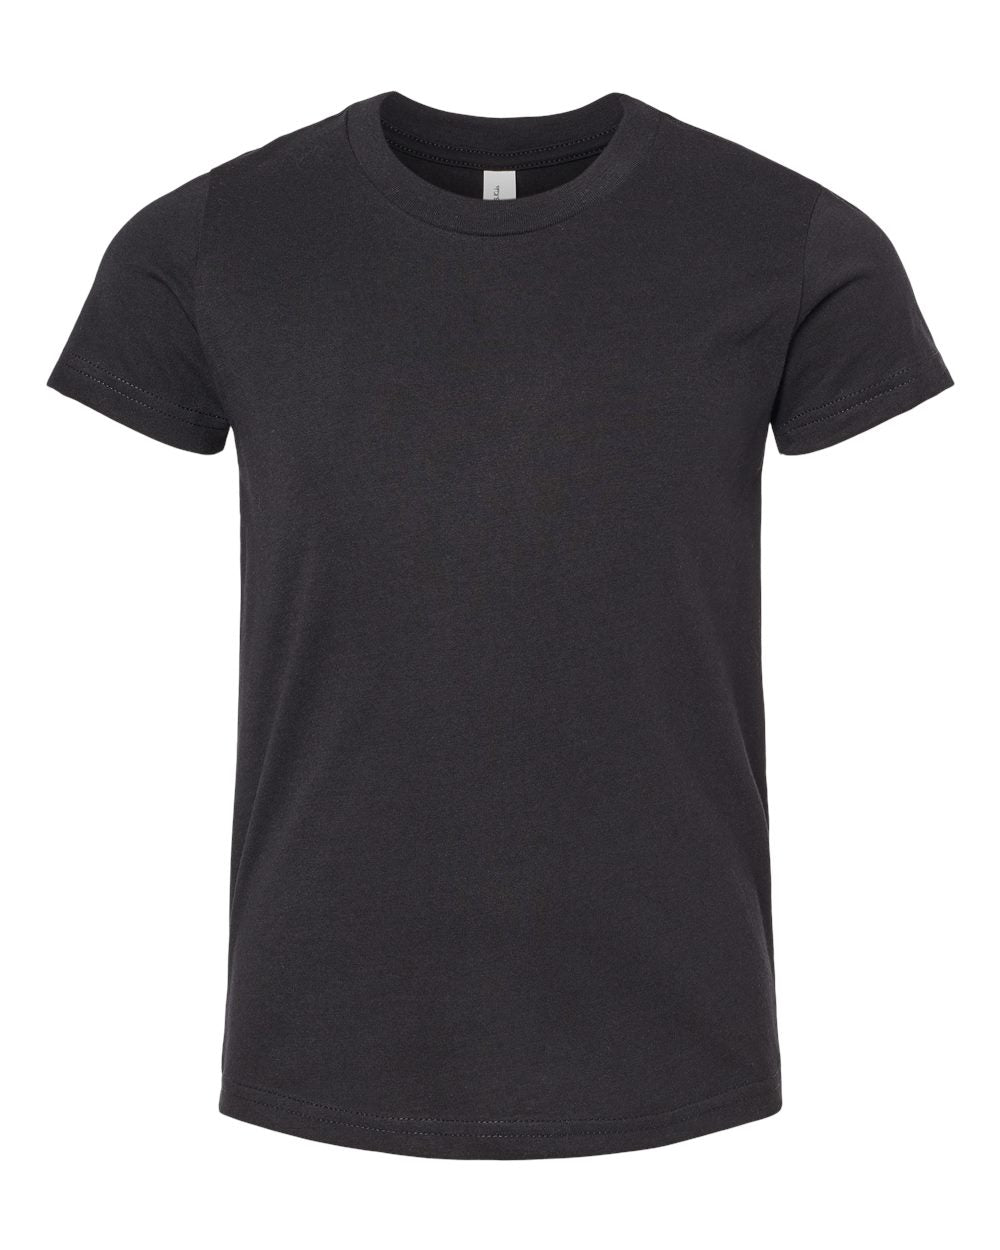 Custom Lake - Youth Jersey Tee Shirt - Black